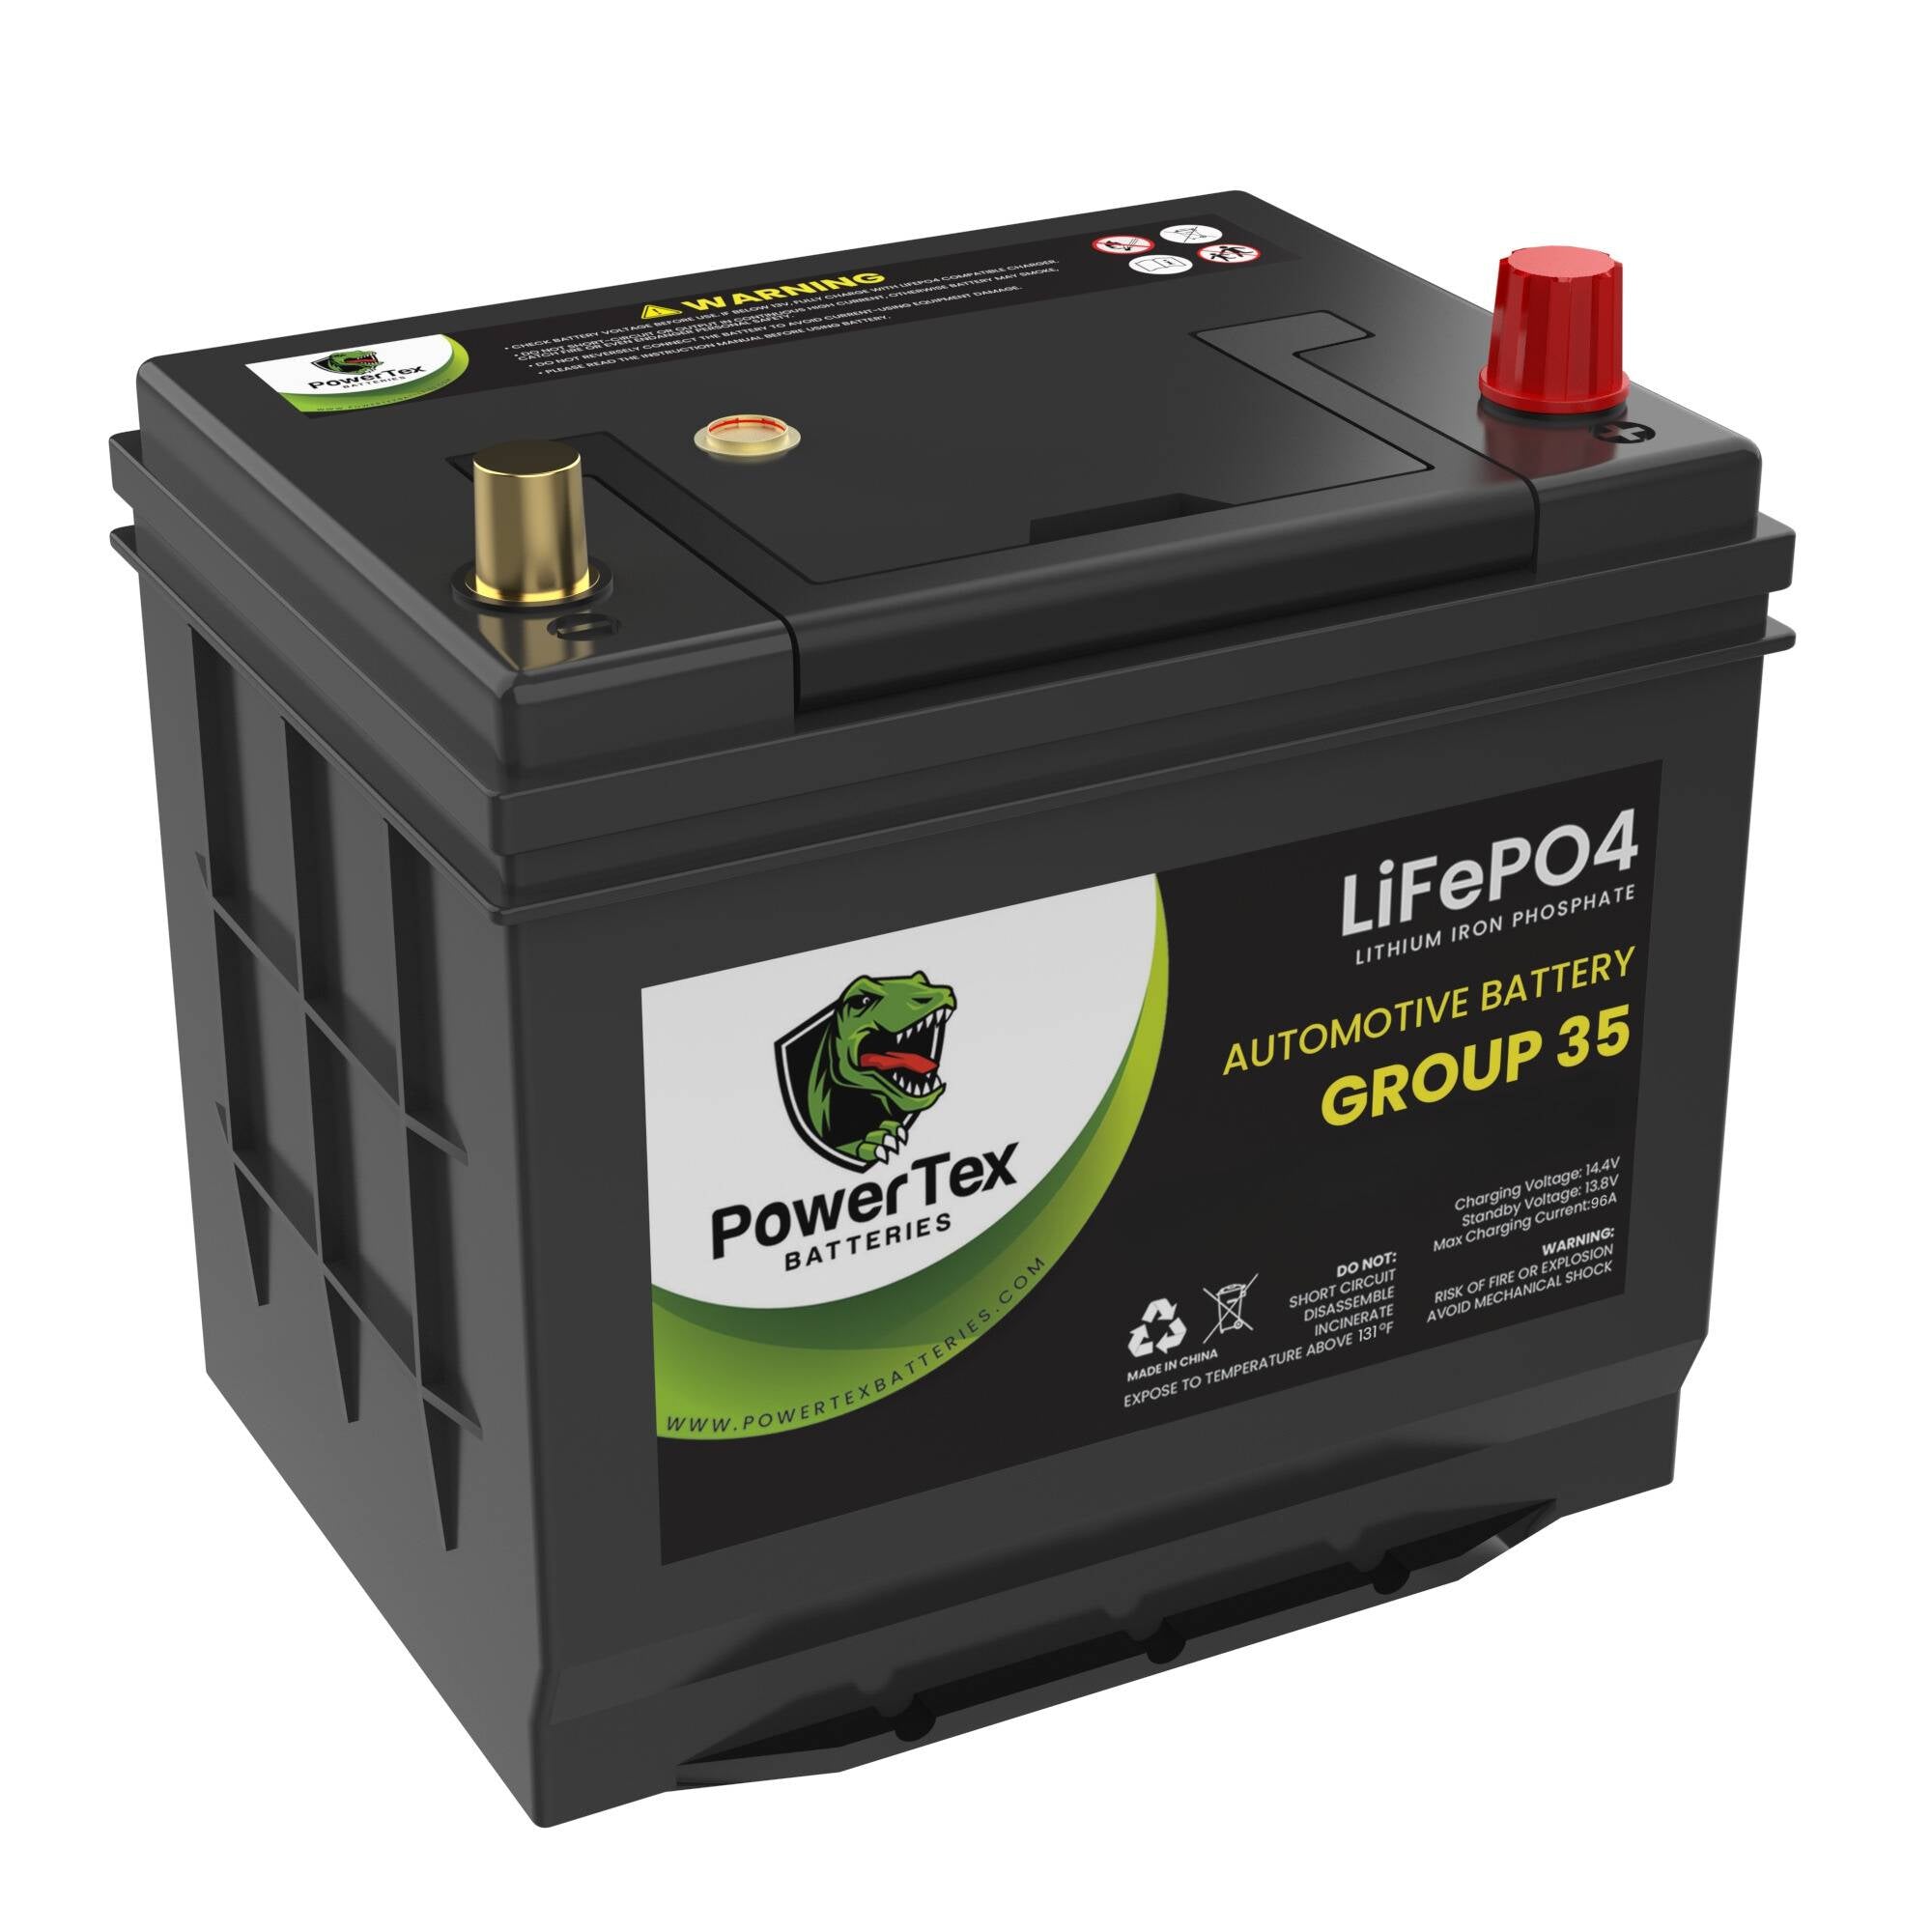 PowerTex Batteries BCI Group 35 / Q85 Lithium LiFePO4 Automotive Battery